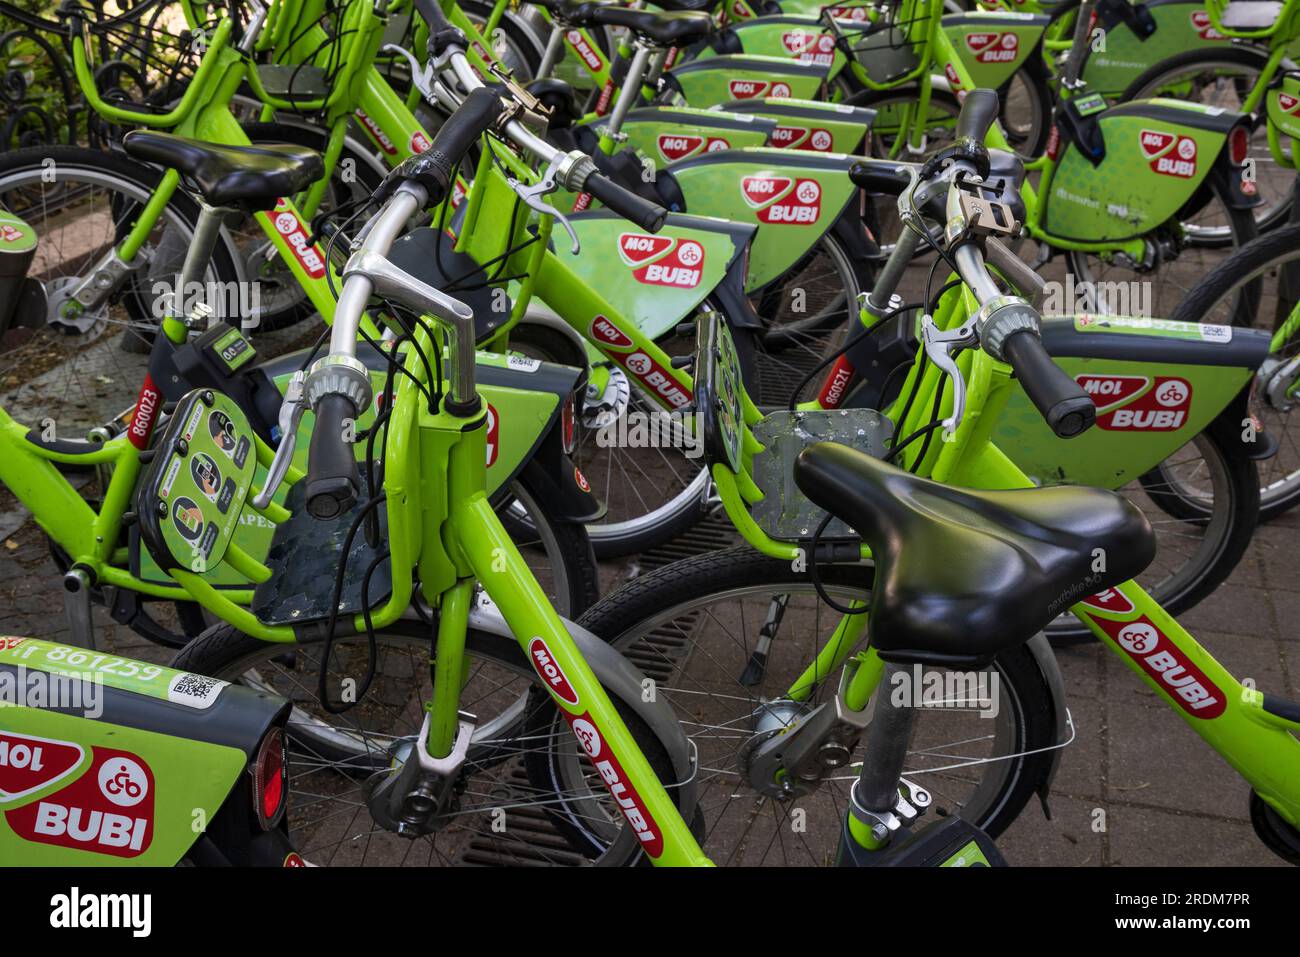 Bubi Rental bikes in Budapest, Hungary Stock Photo